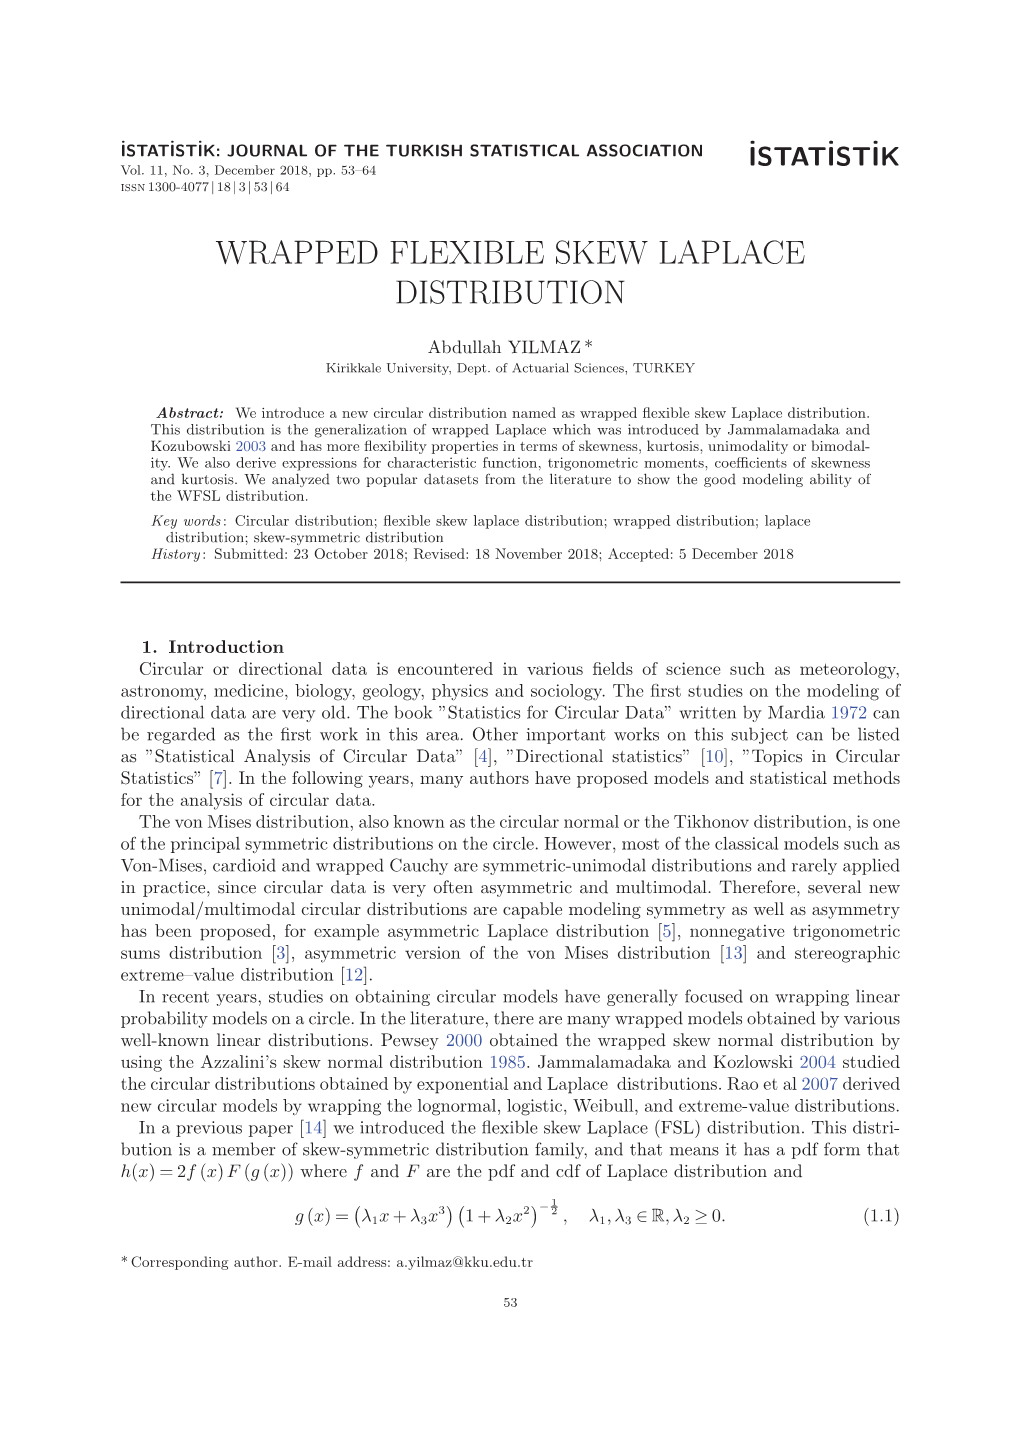 Wrapped Flexible Skew Laplace Distribution